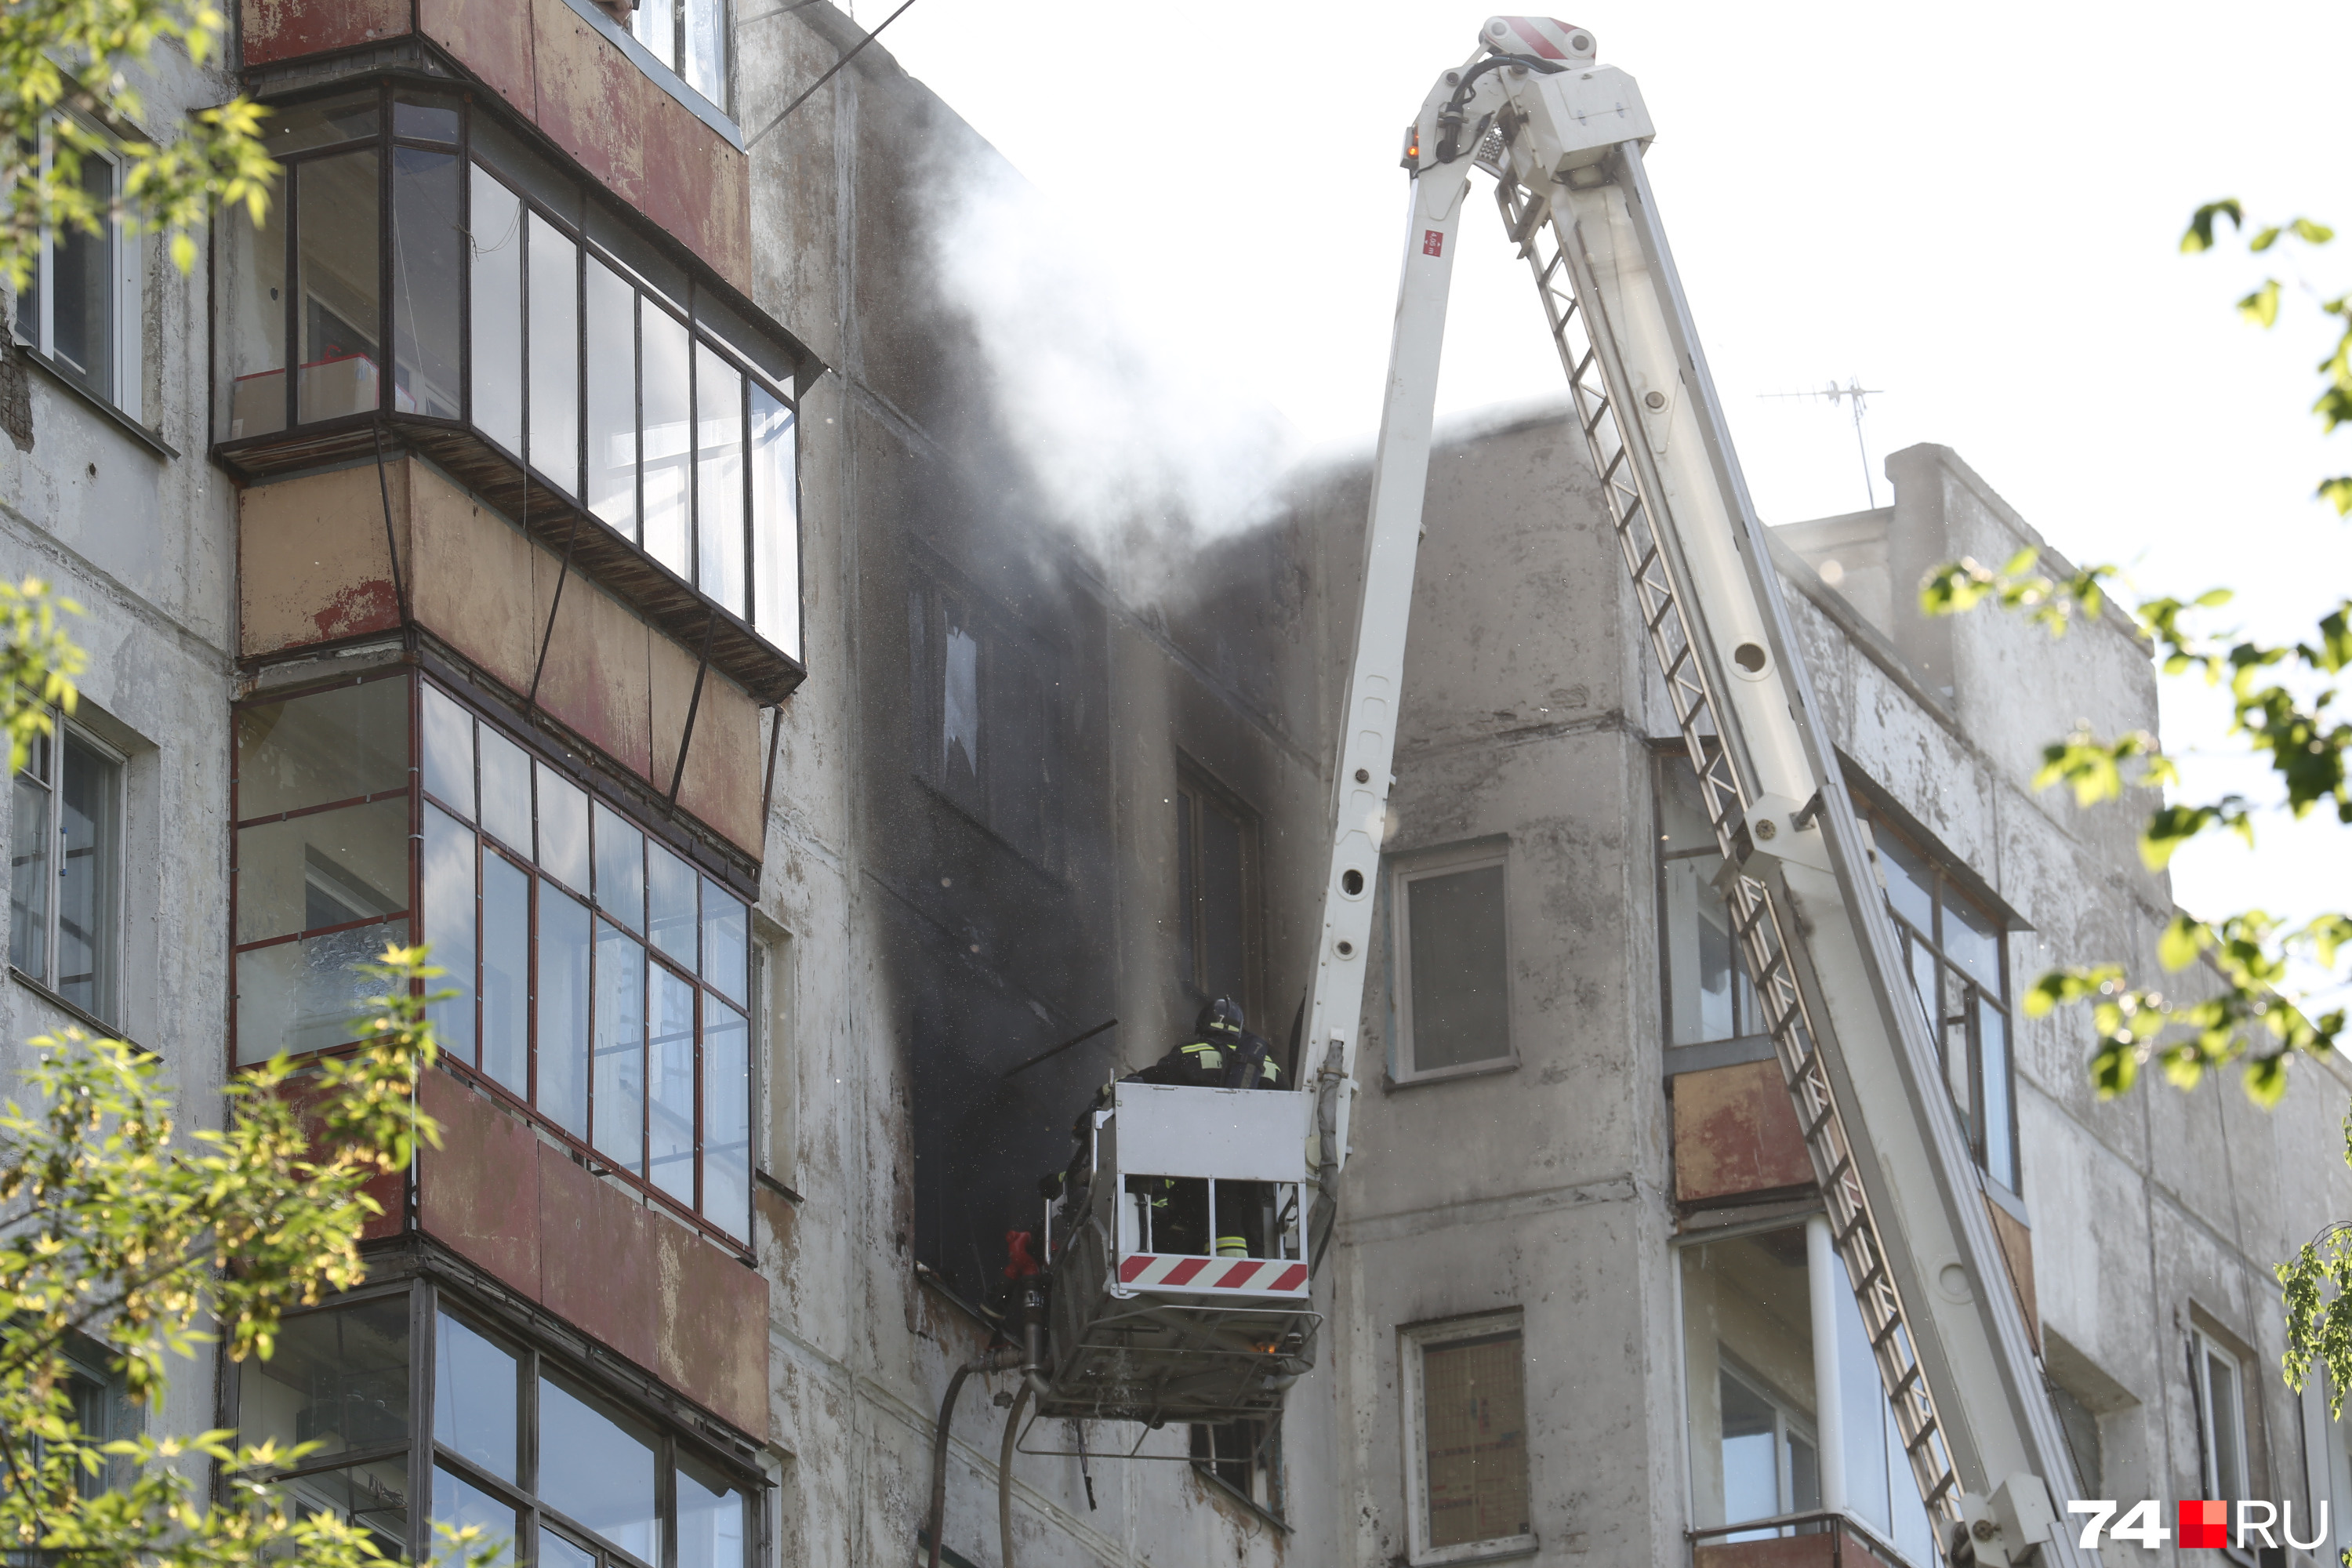 Квартира, на балконе которой началось возгорание, сильно пострадала